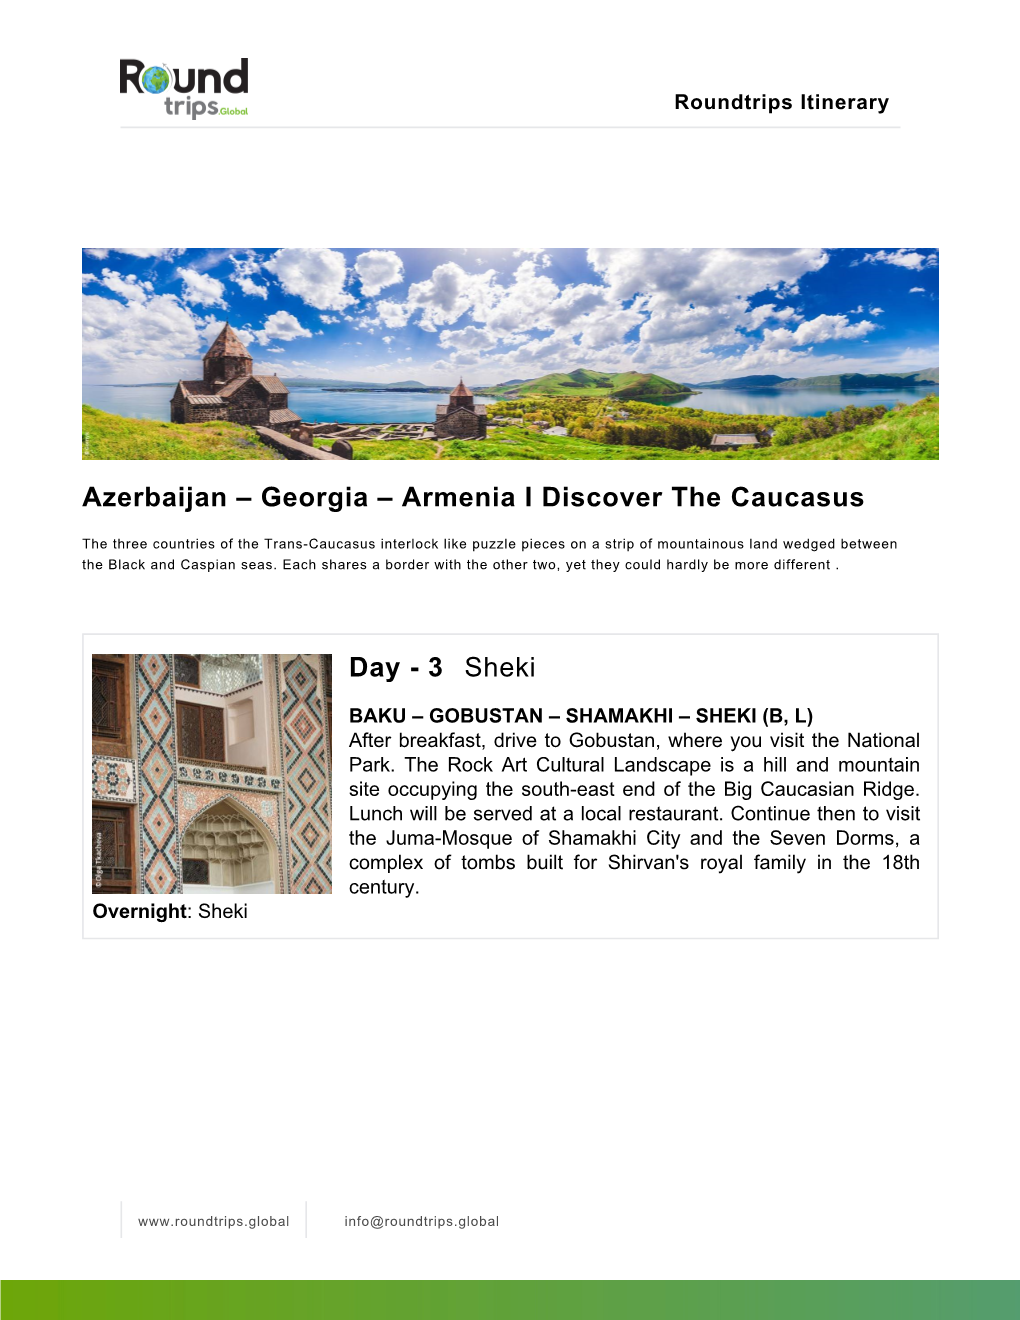 Azerbaijan – Georgia – Armenia I Discover the Caucasus